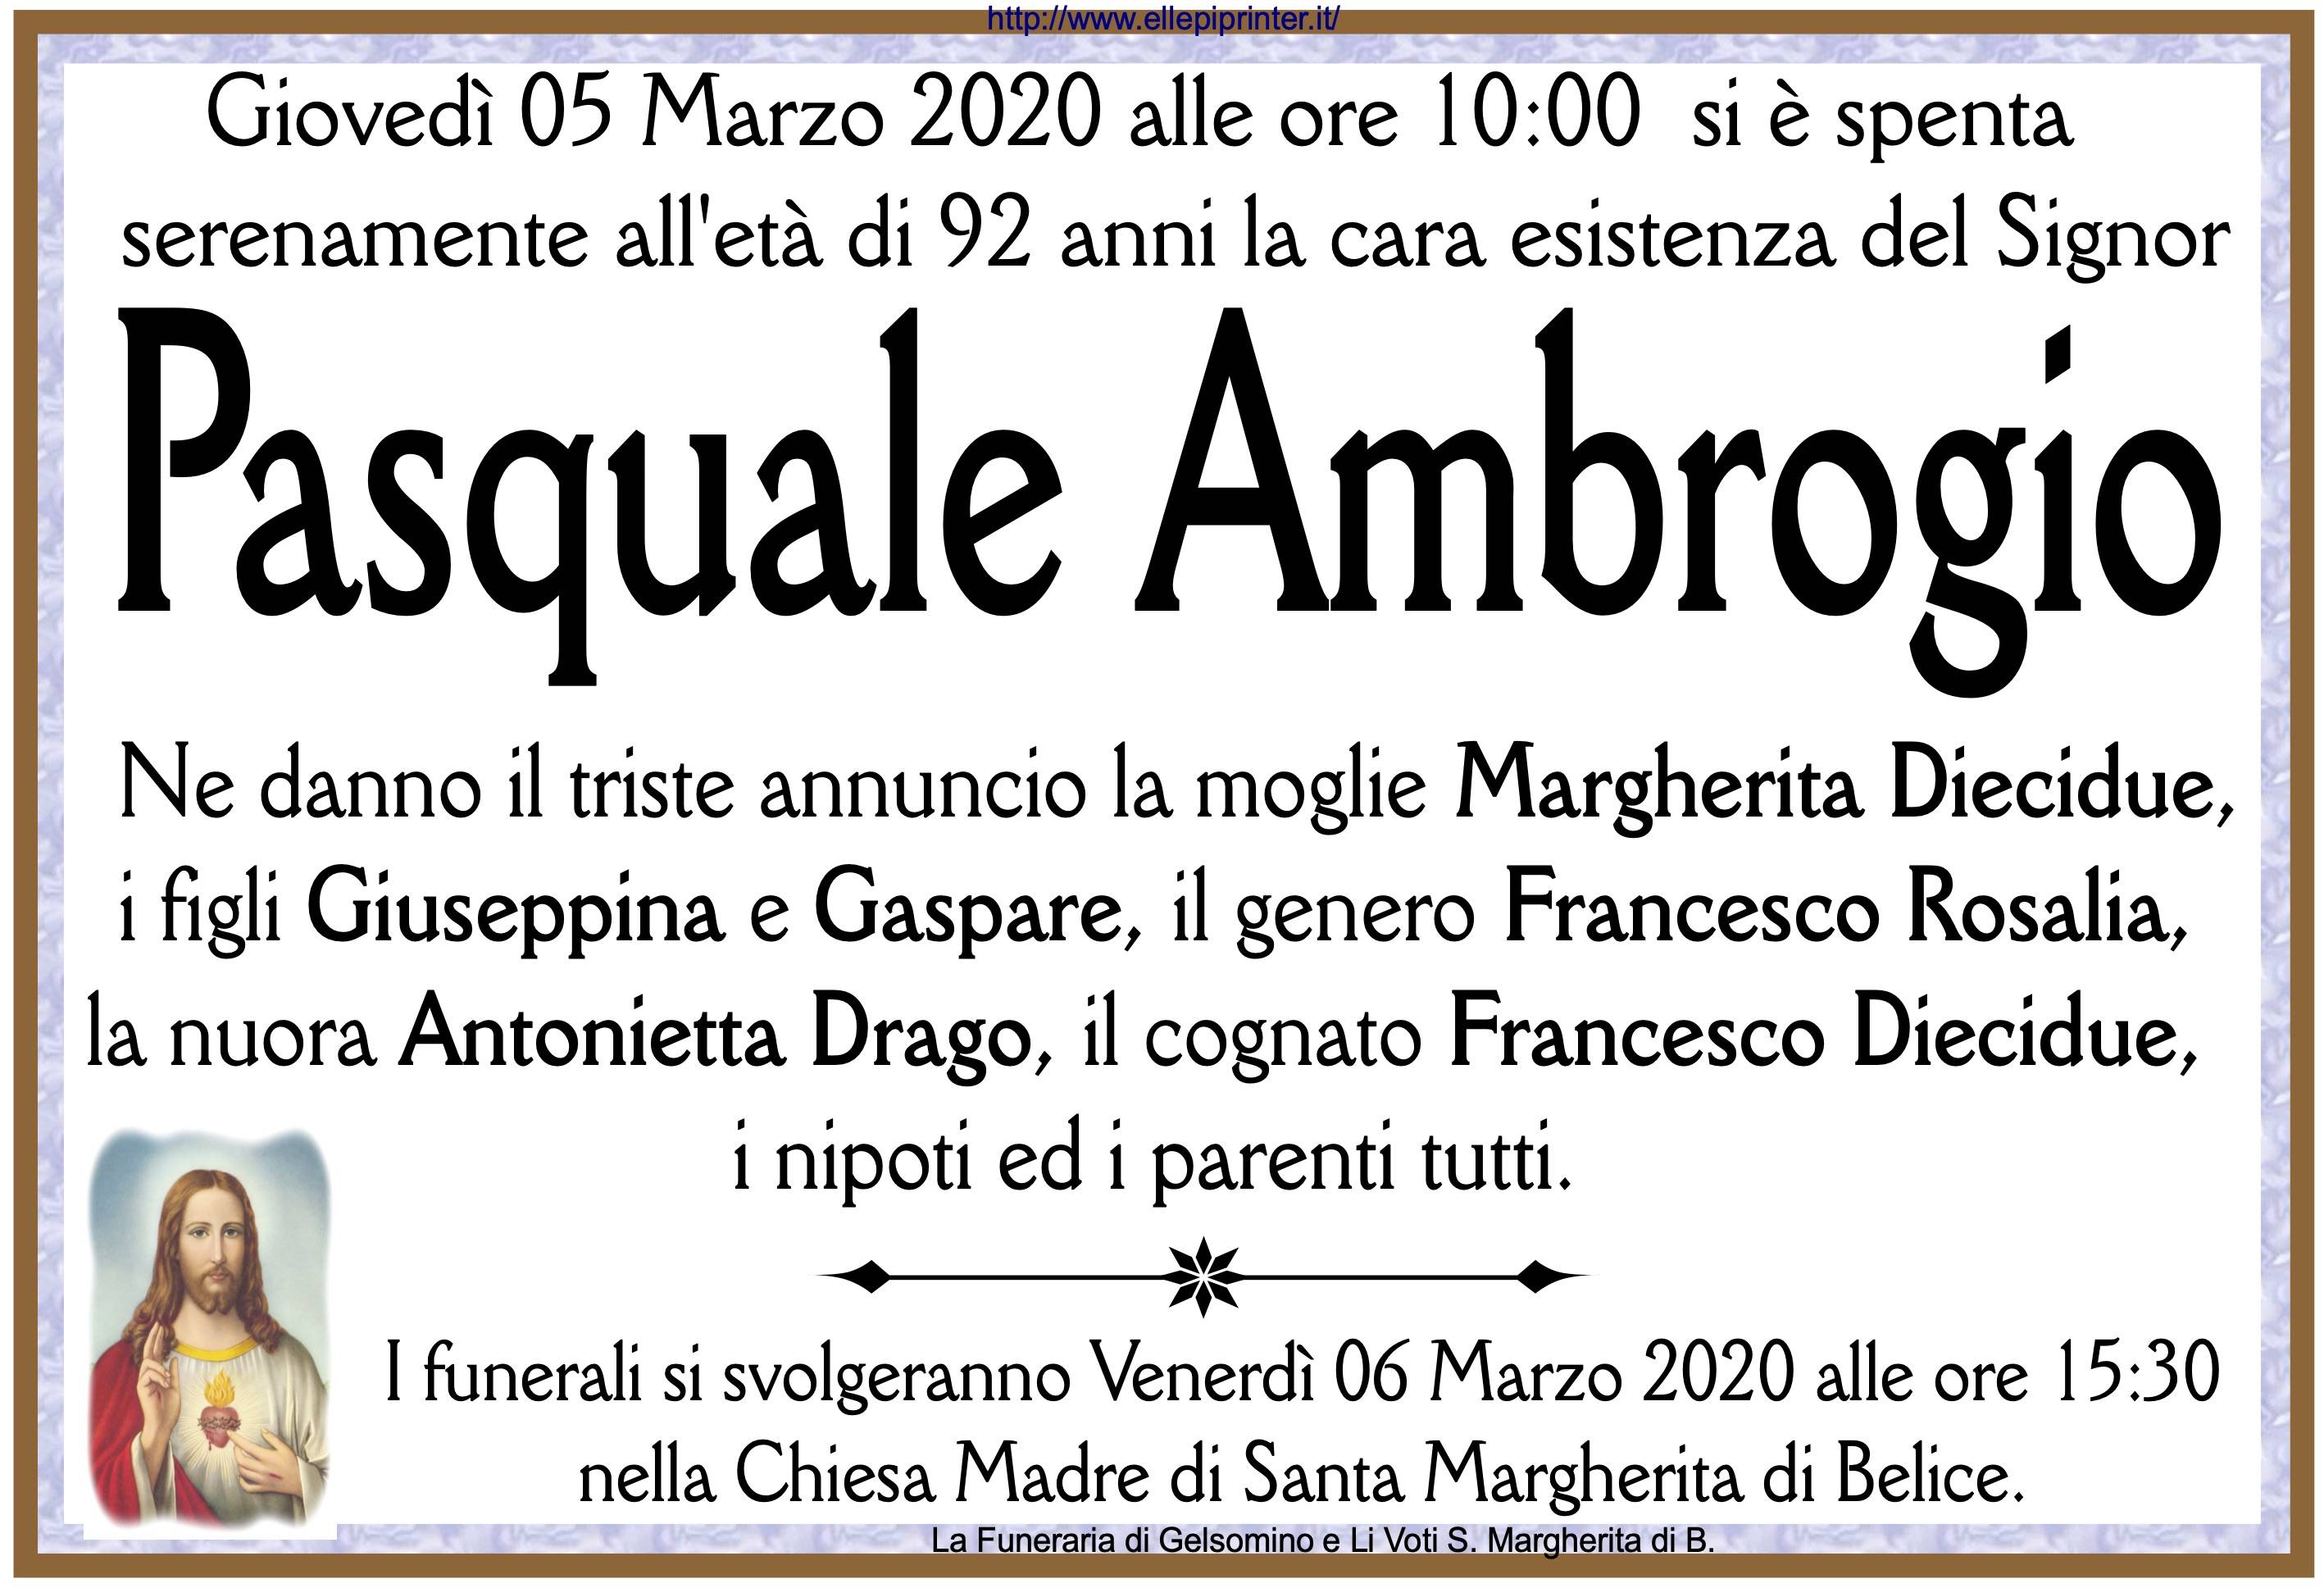 Pasquale Ambrogio